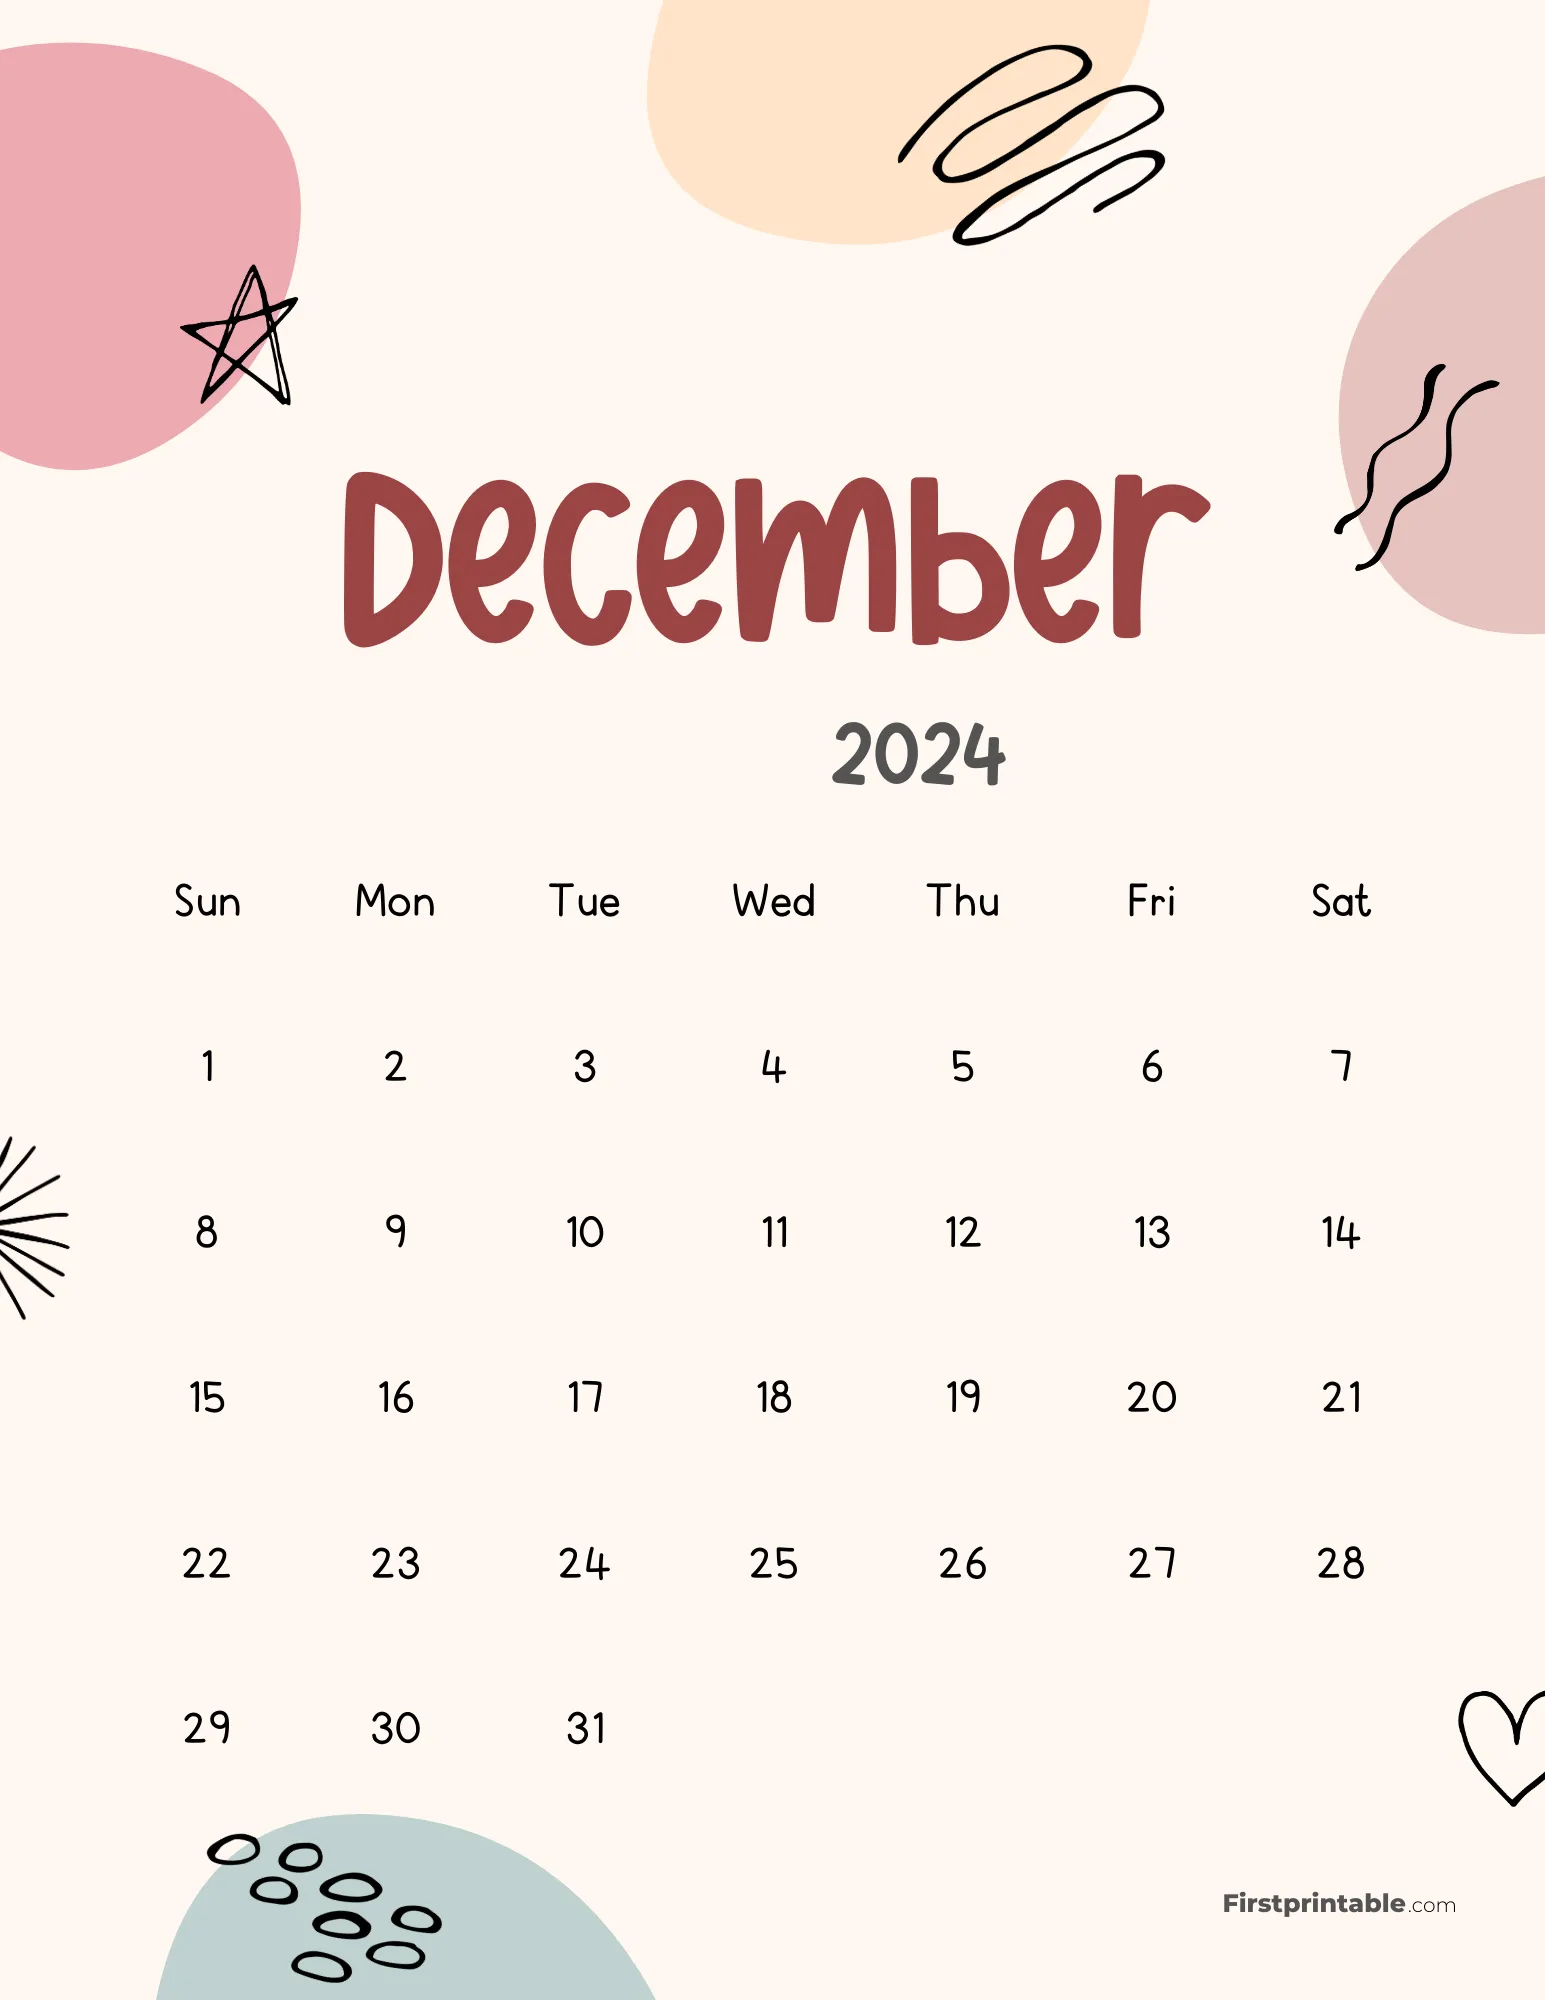 December 2024 Cute Abstract Calendar - Aesthetic Design